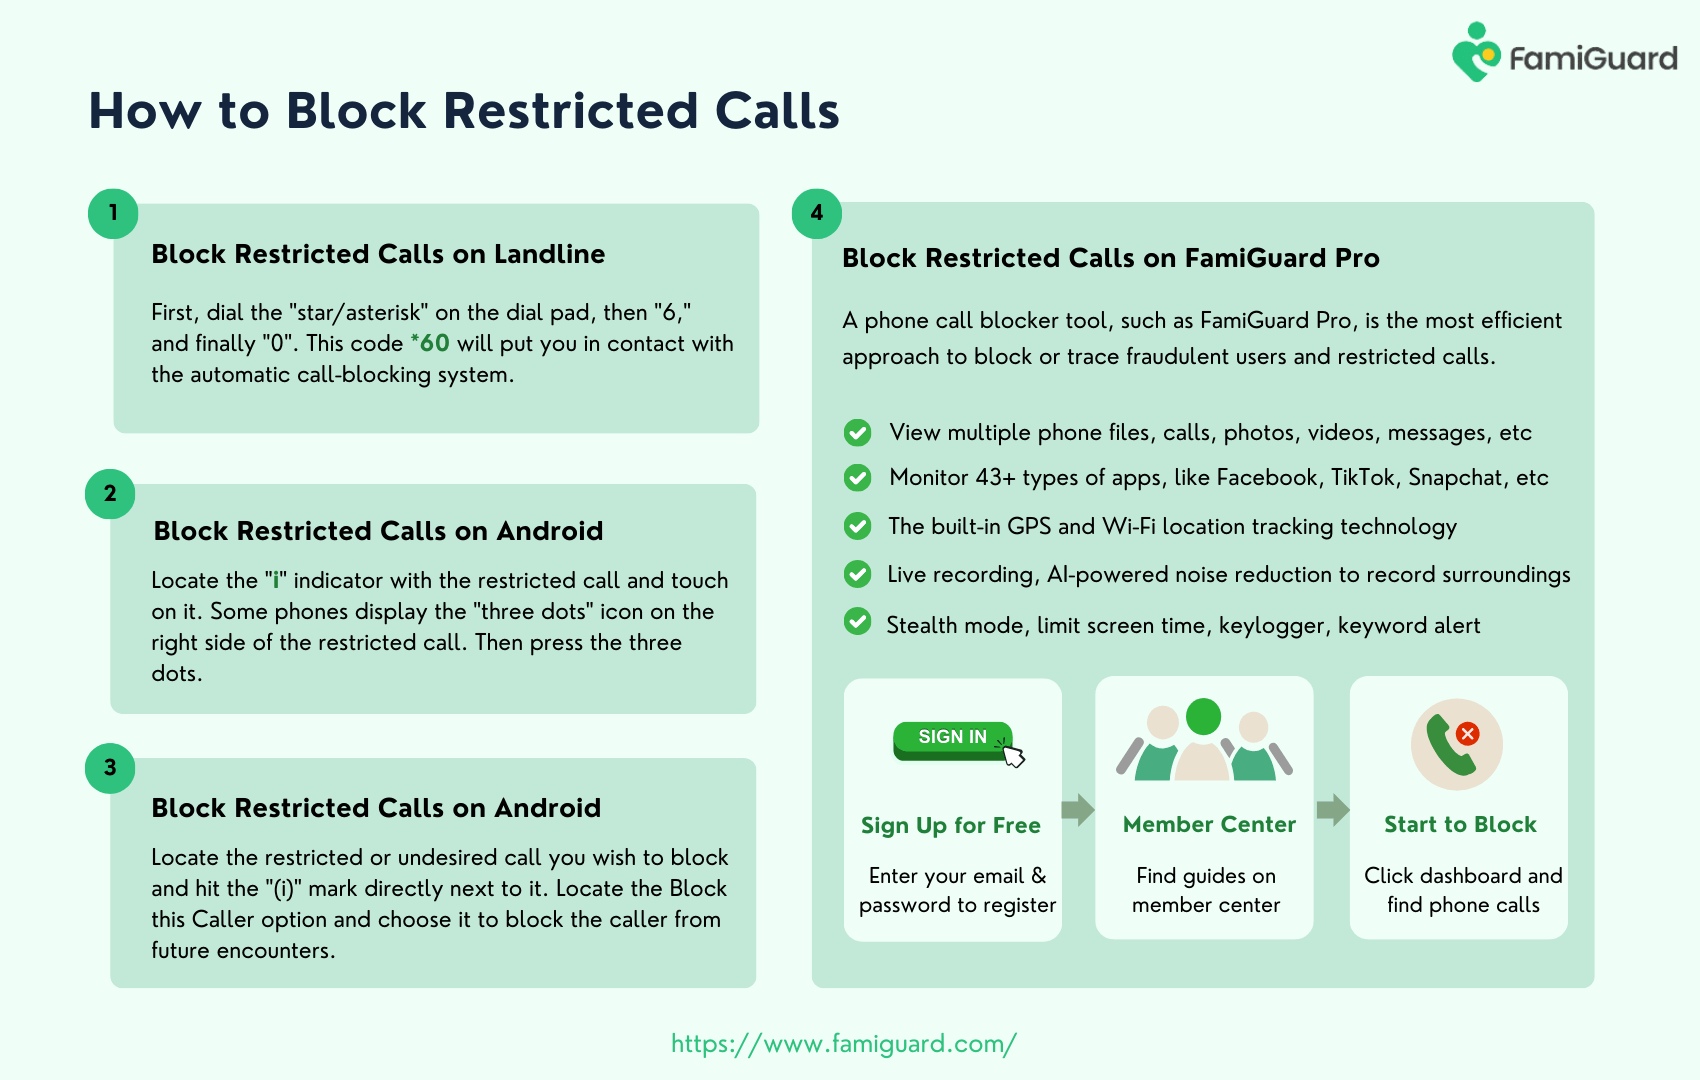 How to Block Restricted Calls 4 Methods